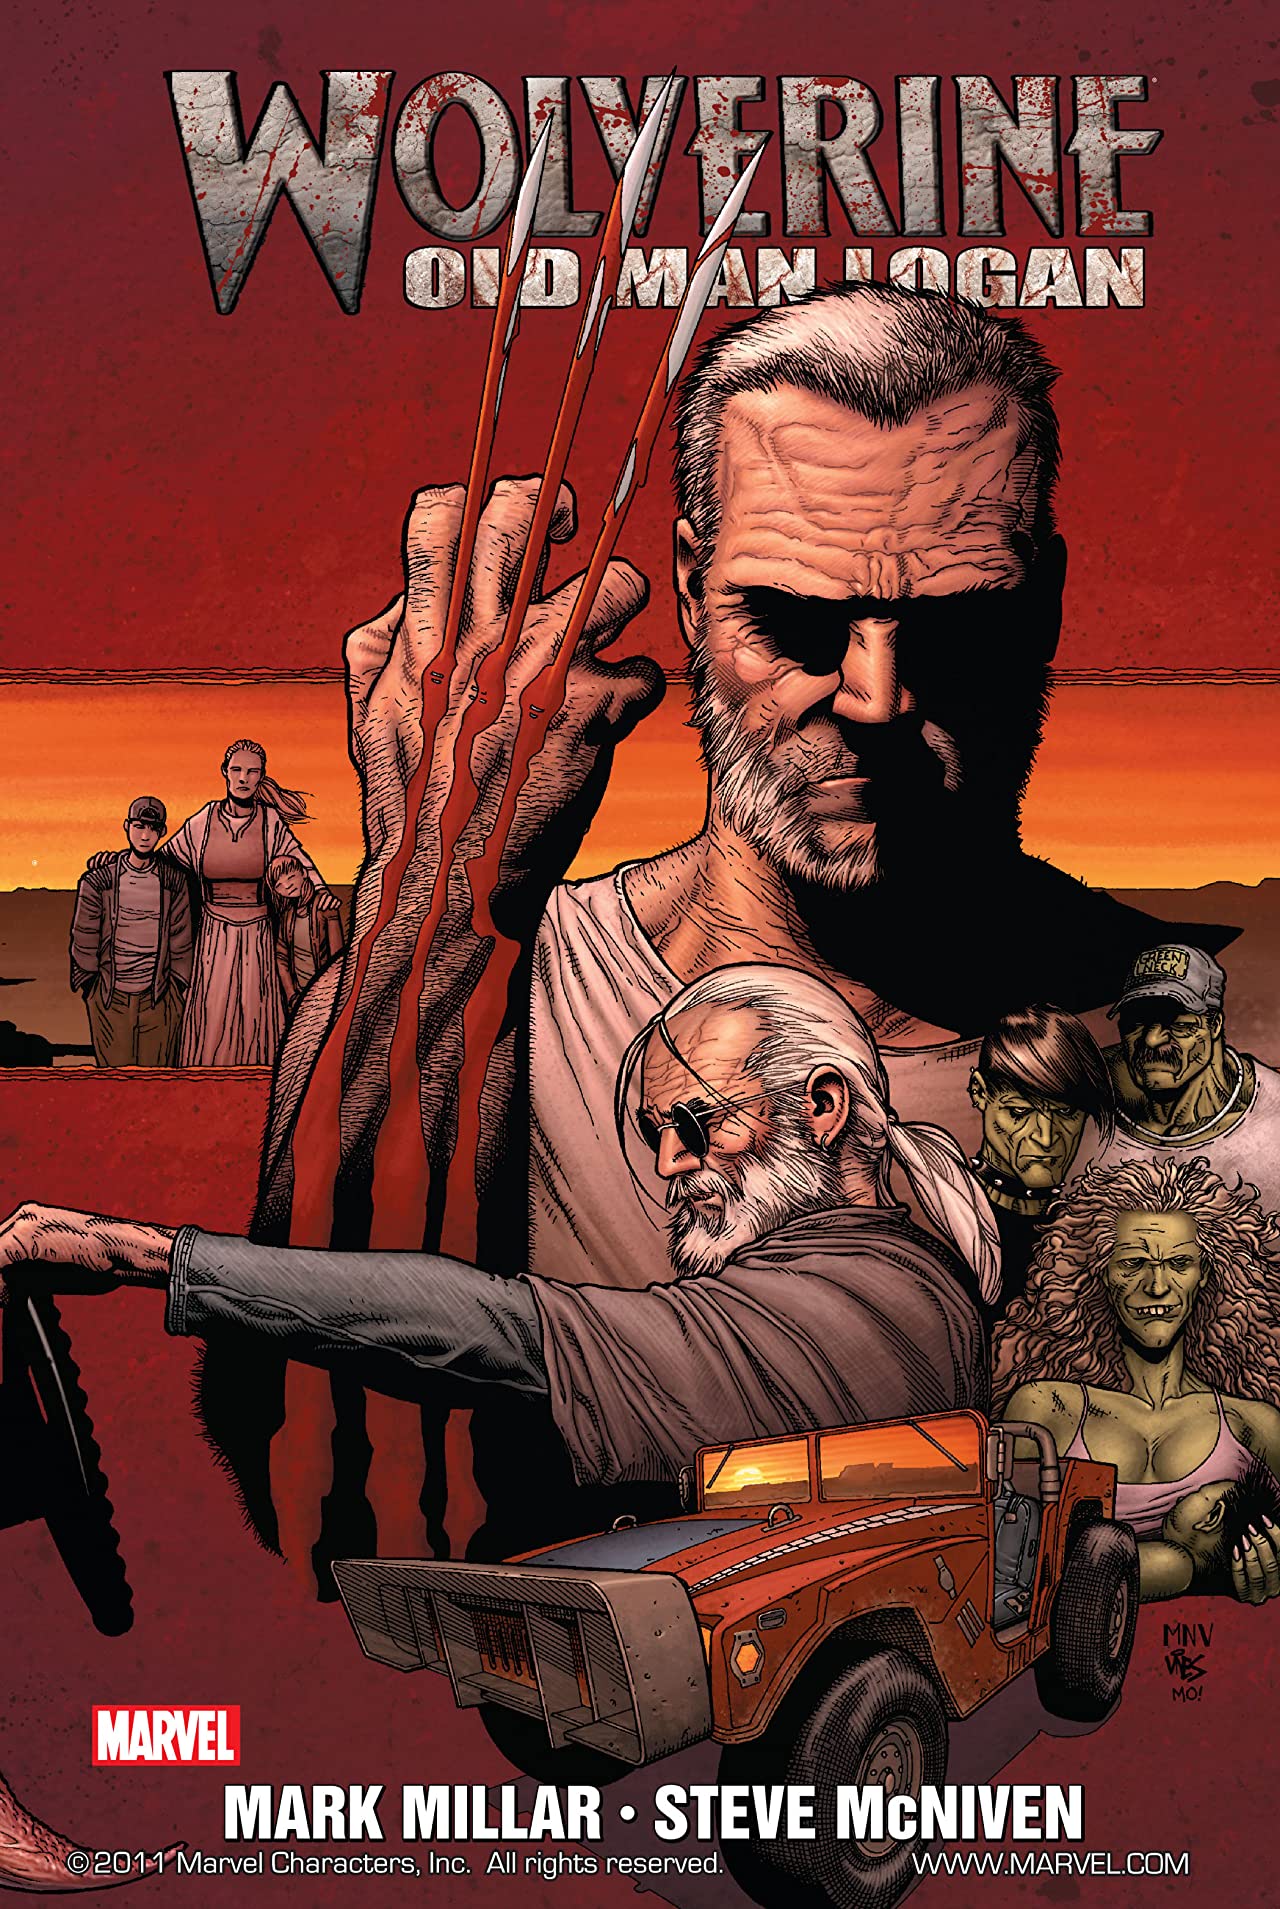 Wolverine Old Man Logan Graphic Novel